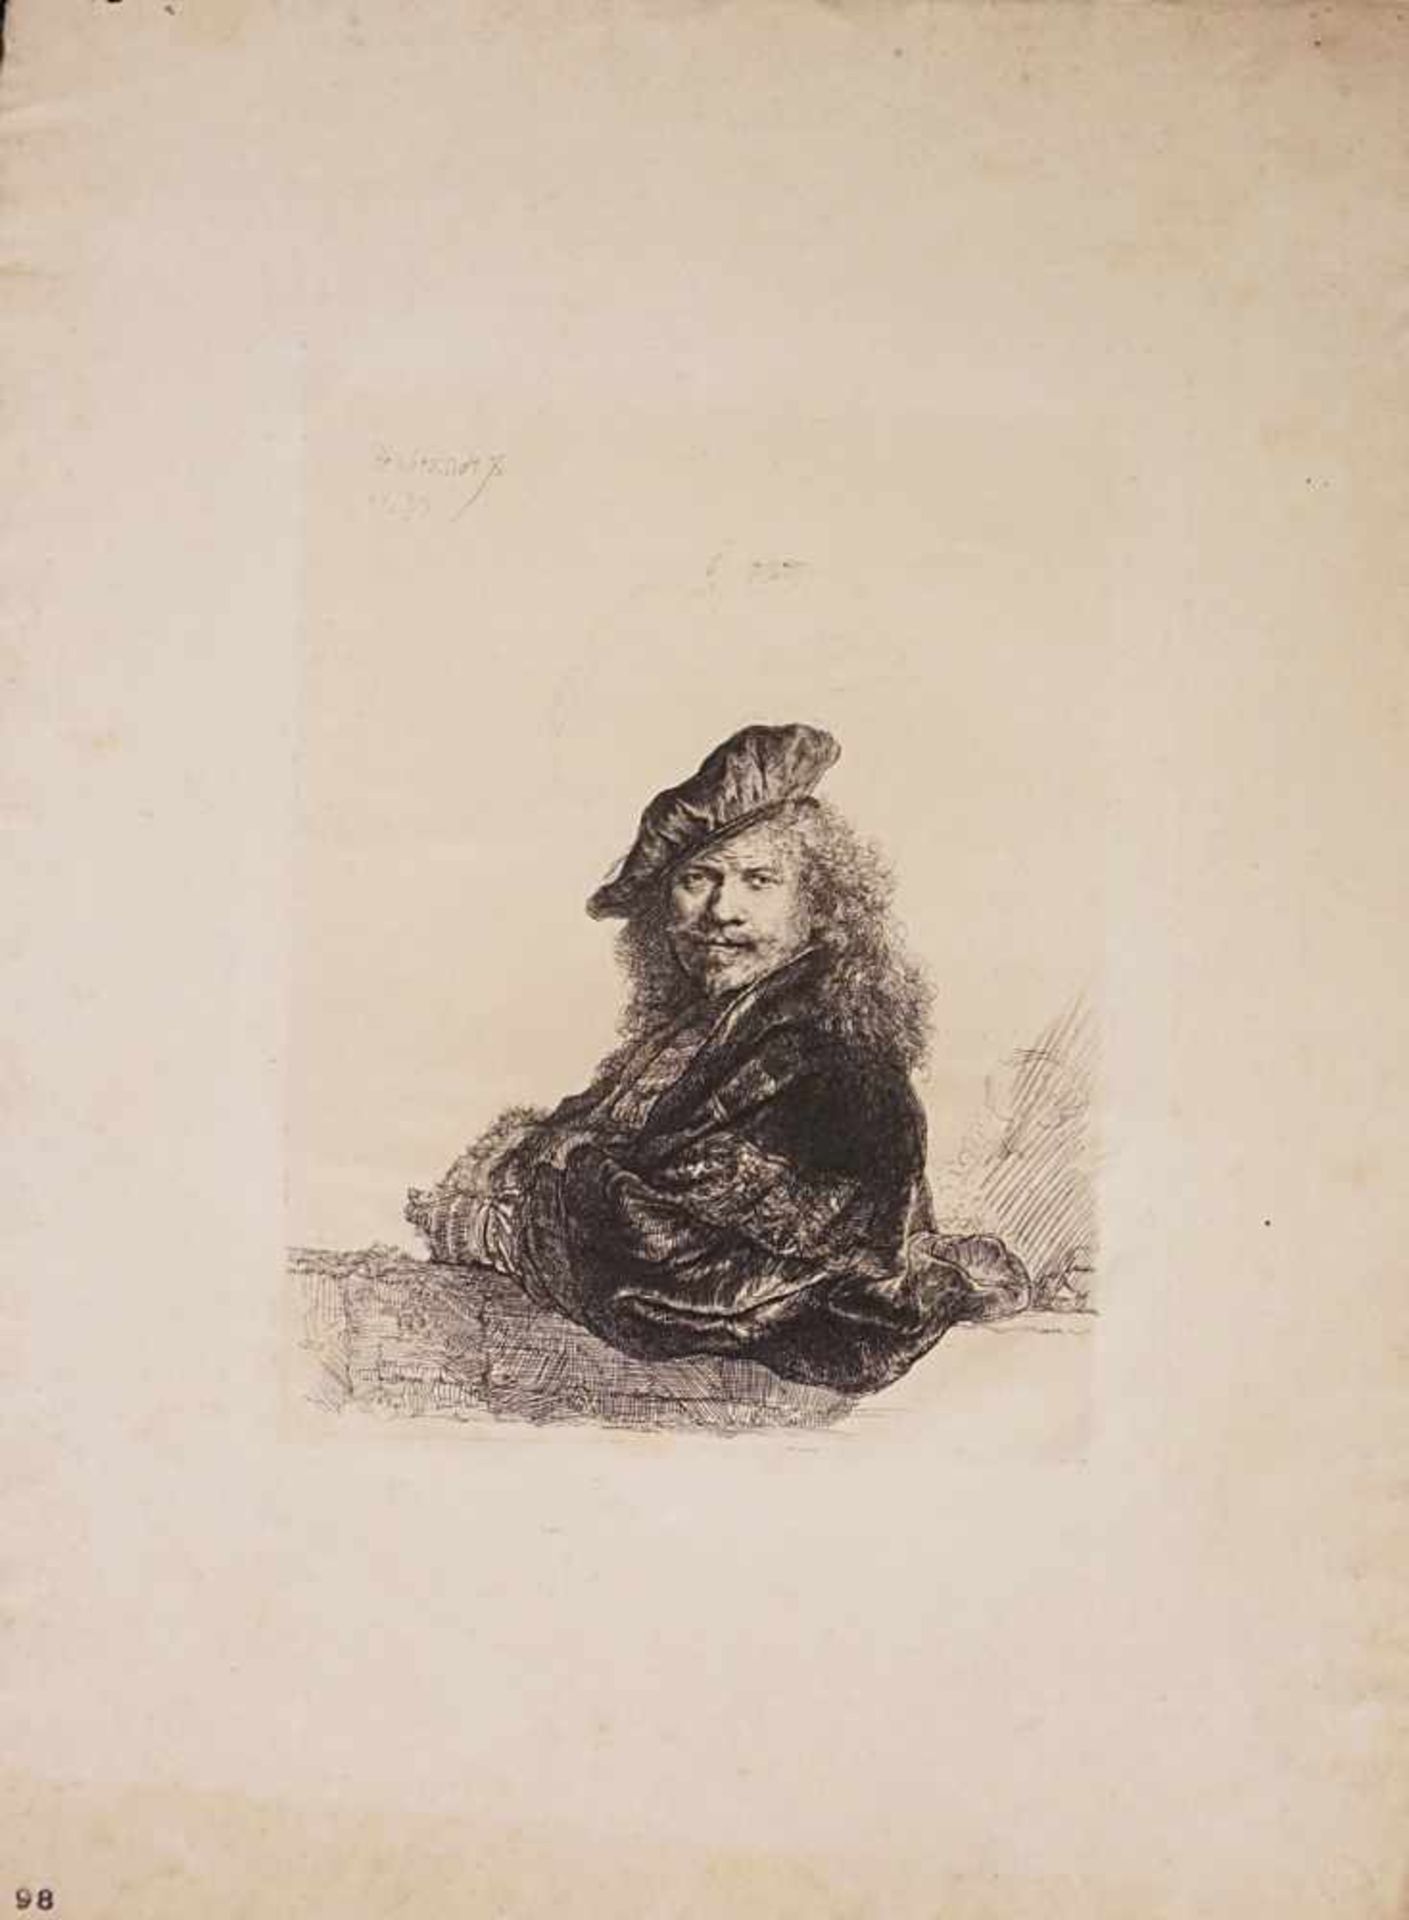 1 Grafik/Reproduktion "Selbstportrait Rembrandts" in Platte L.o. bez. Rembrandt 1639Rückseitig mit